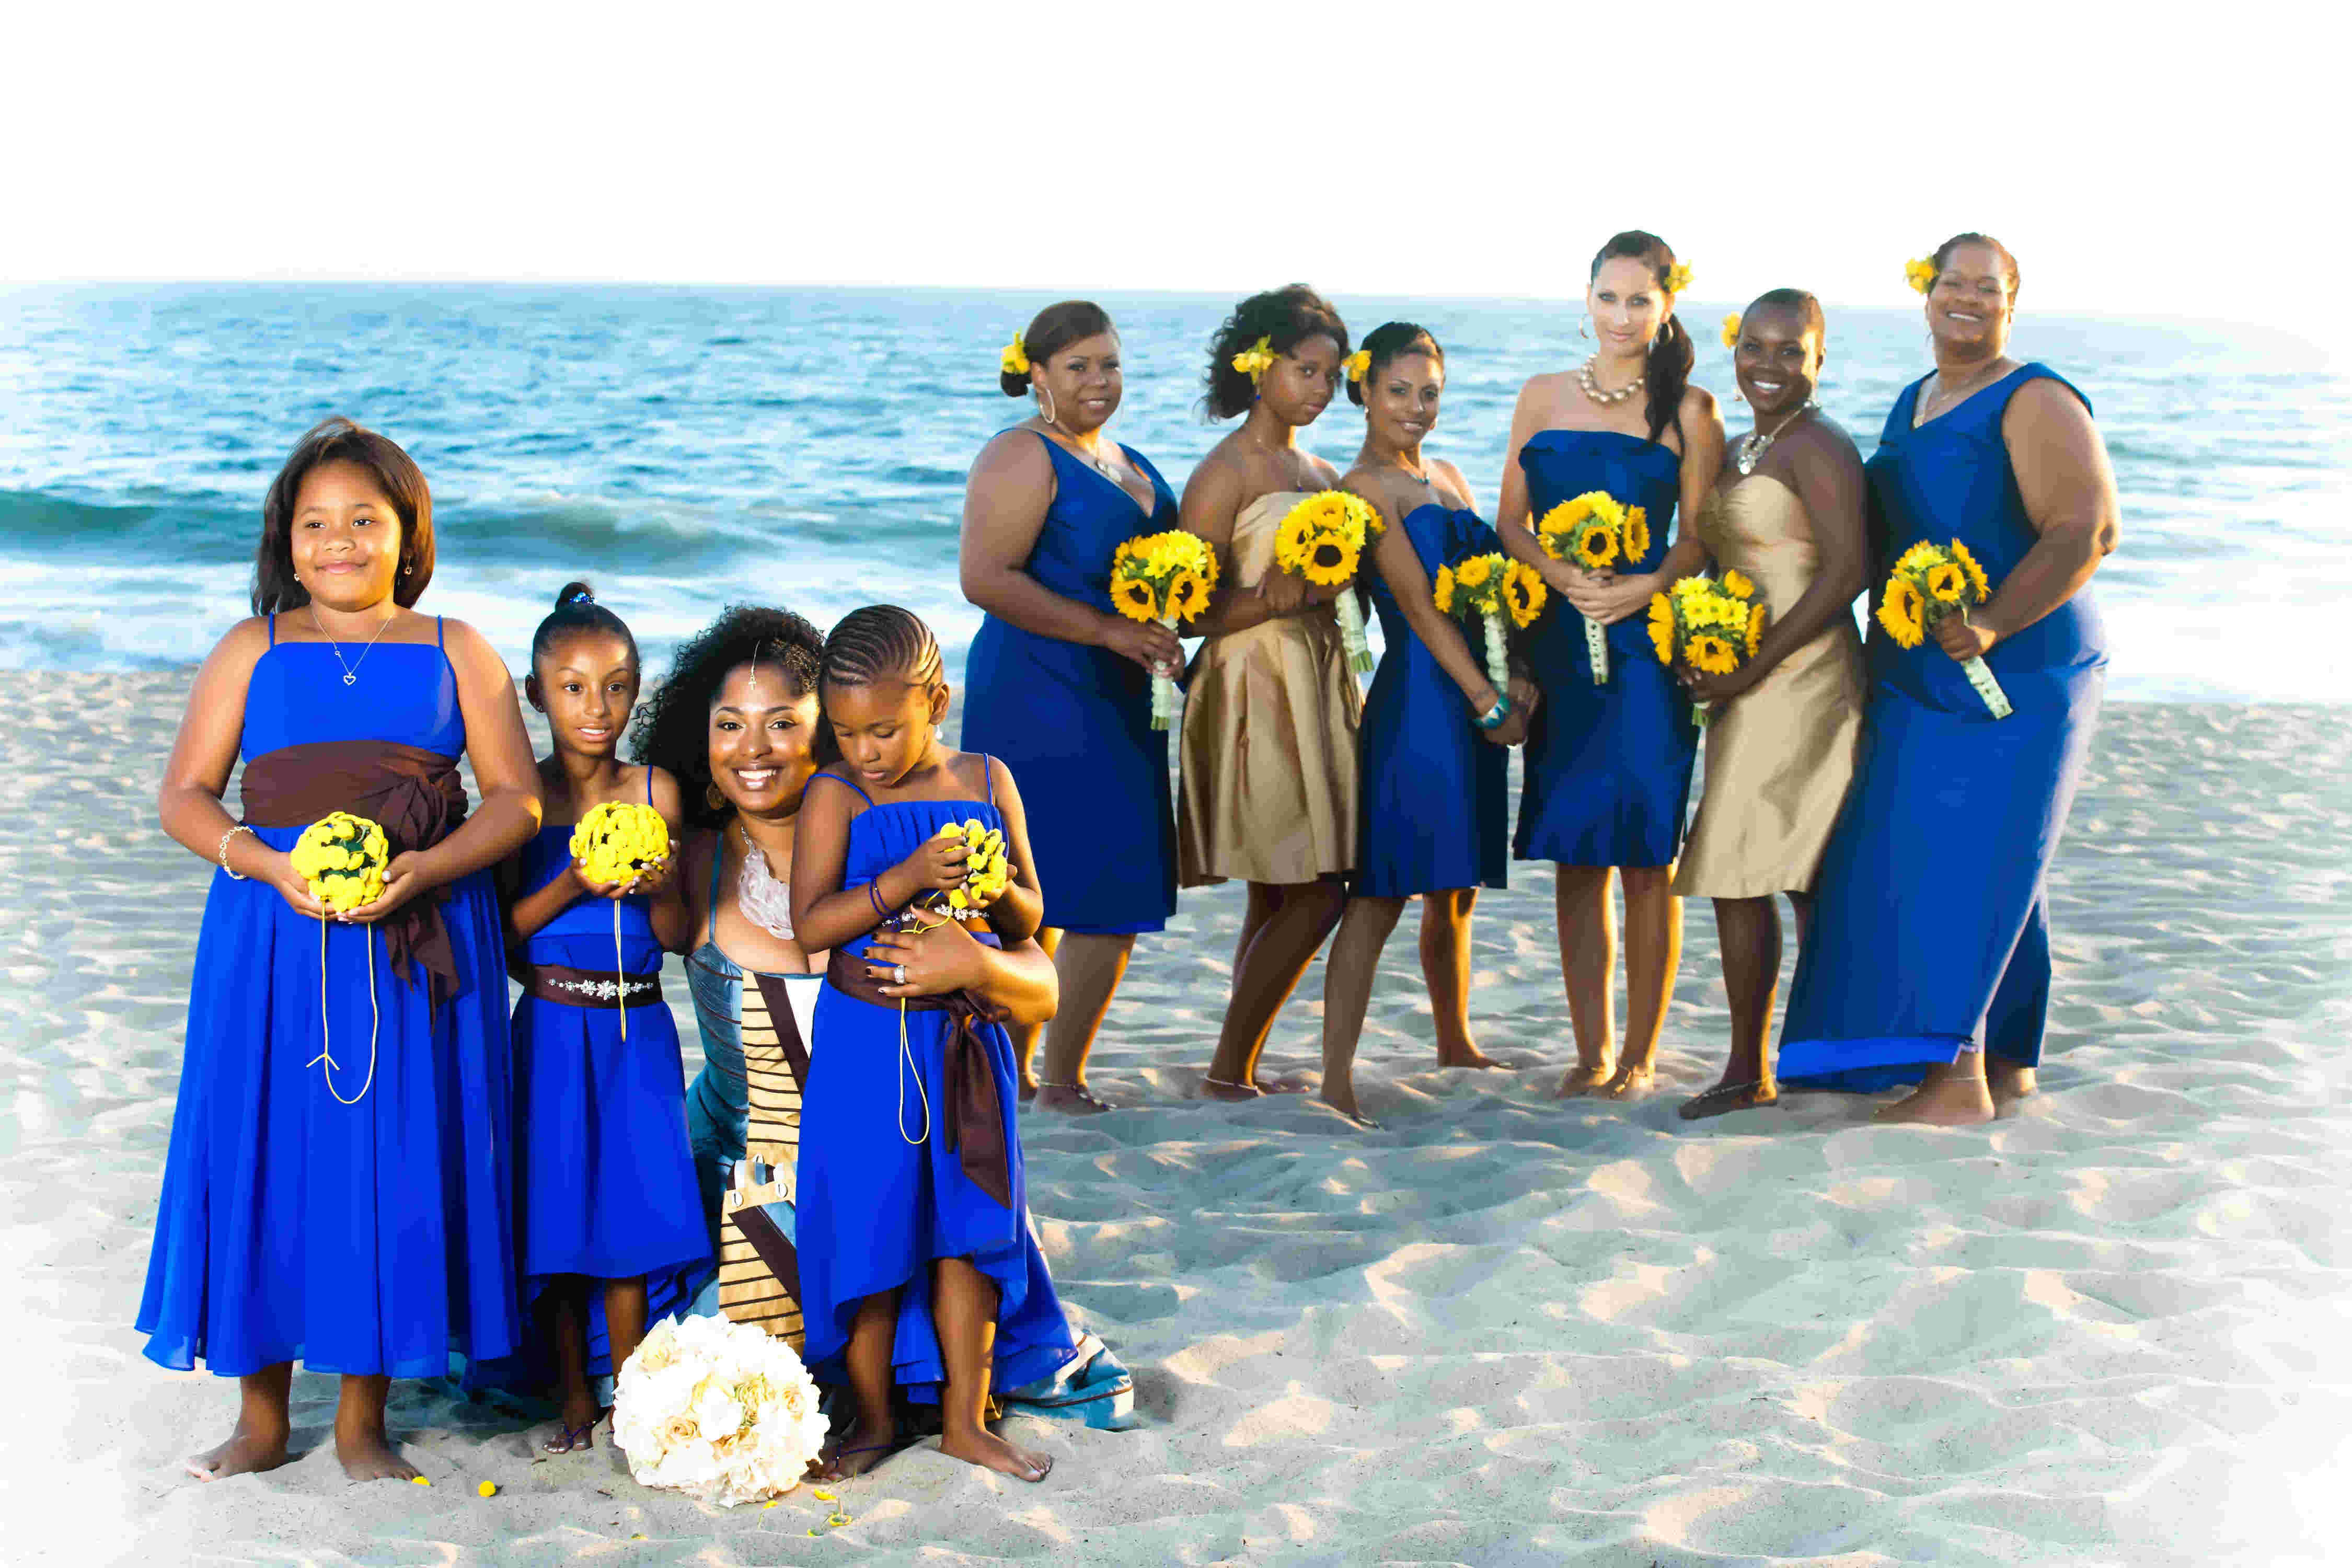 Bridesmaid Dresses Beach Wedding